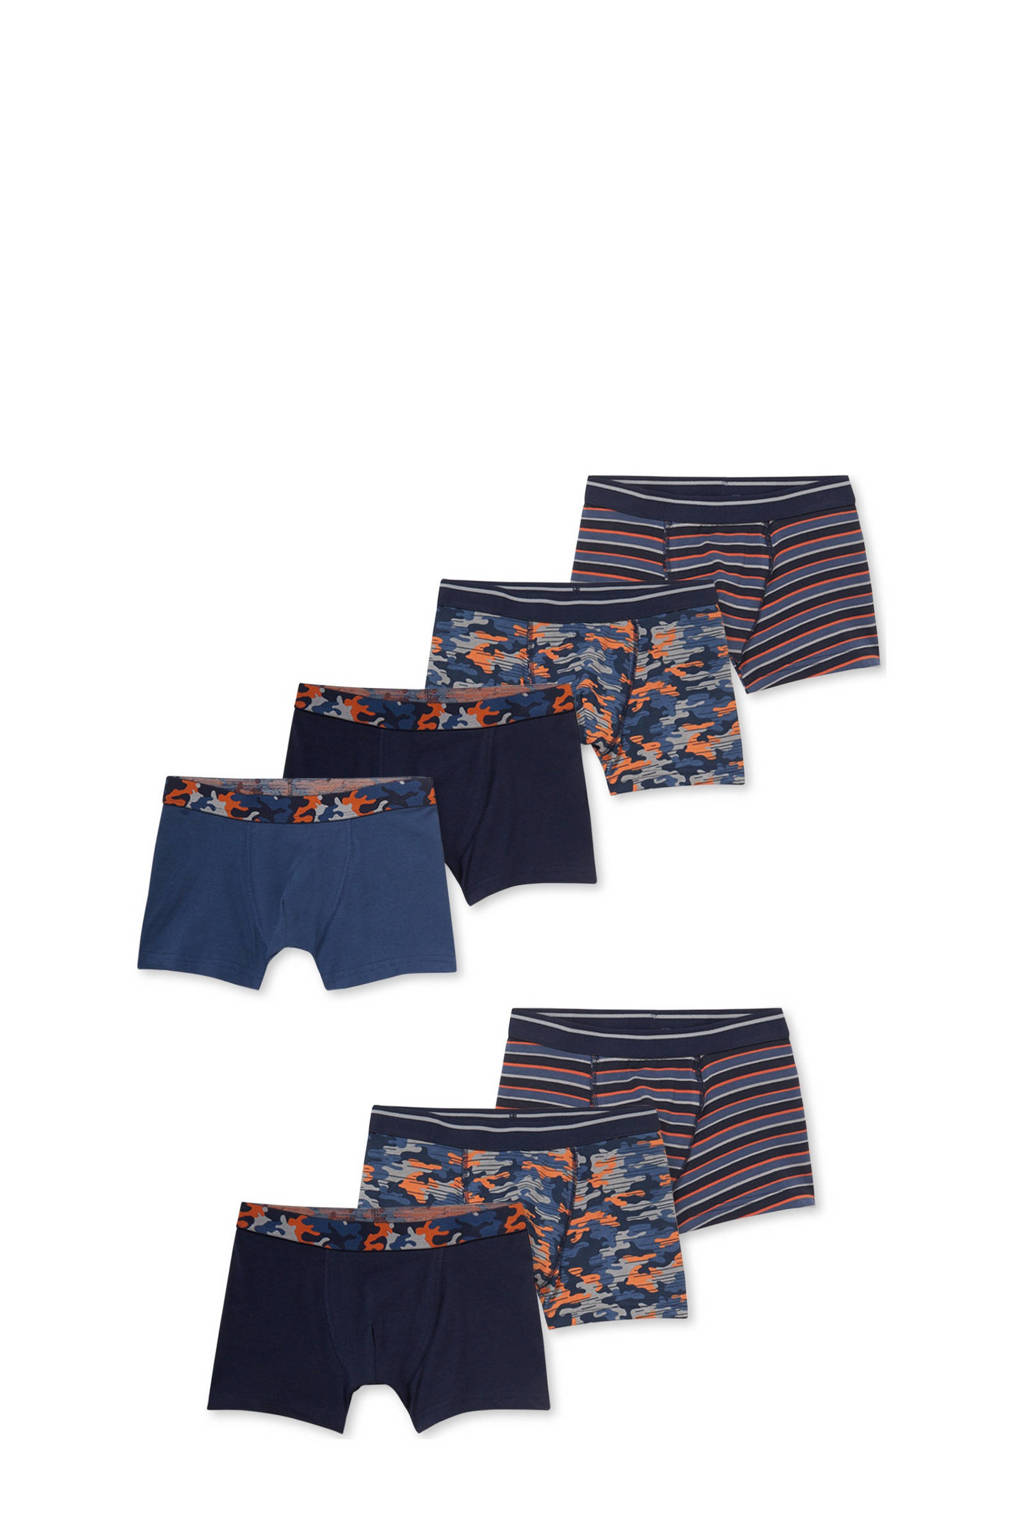 C&A   boxershort - set van 7 blauw/oranje, Donkerblauw